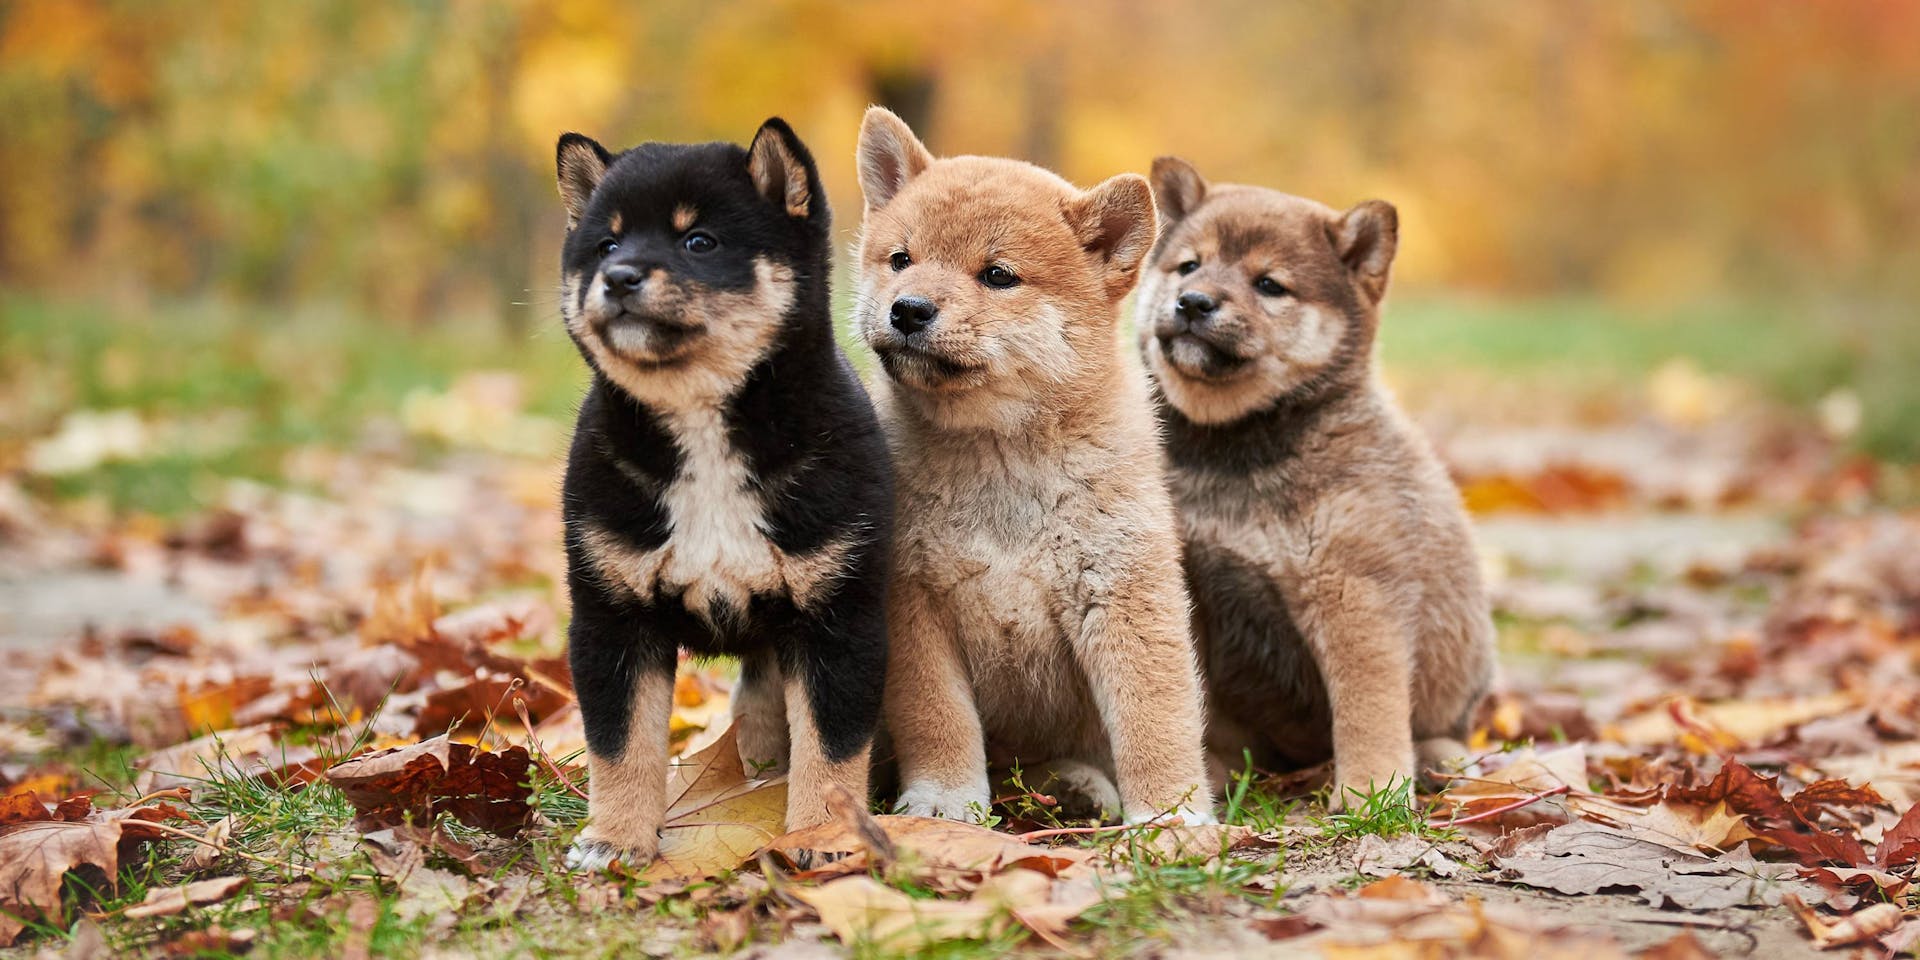 Three Shiba Inu puppies standing on fallen fall leaves.